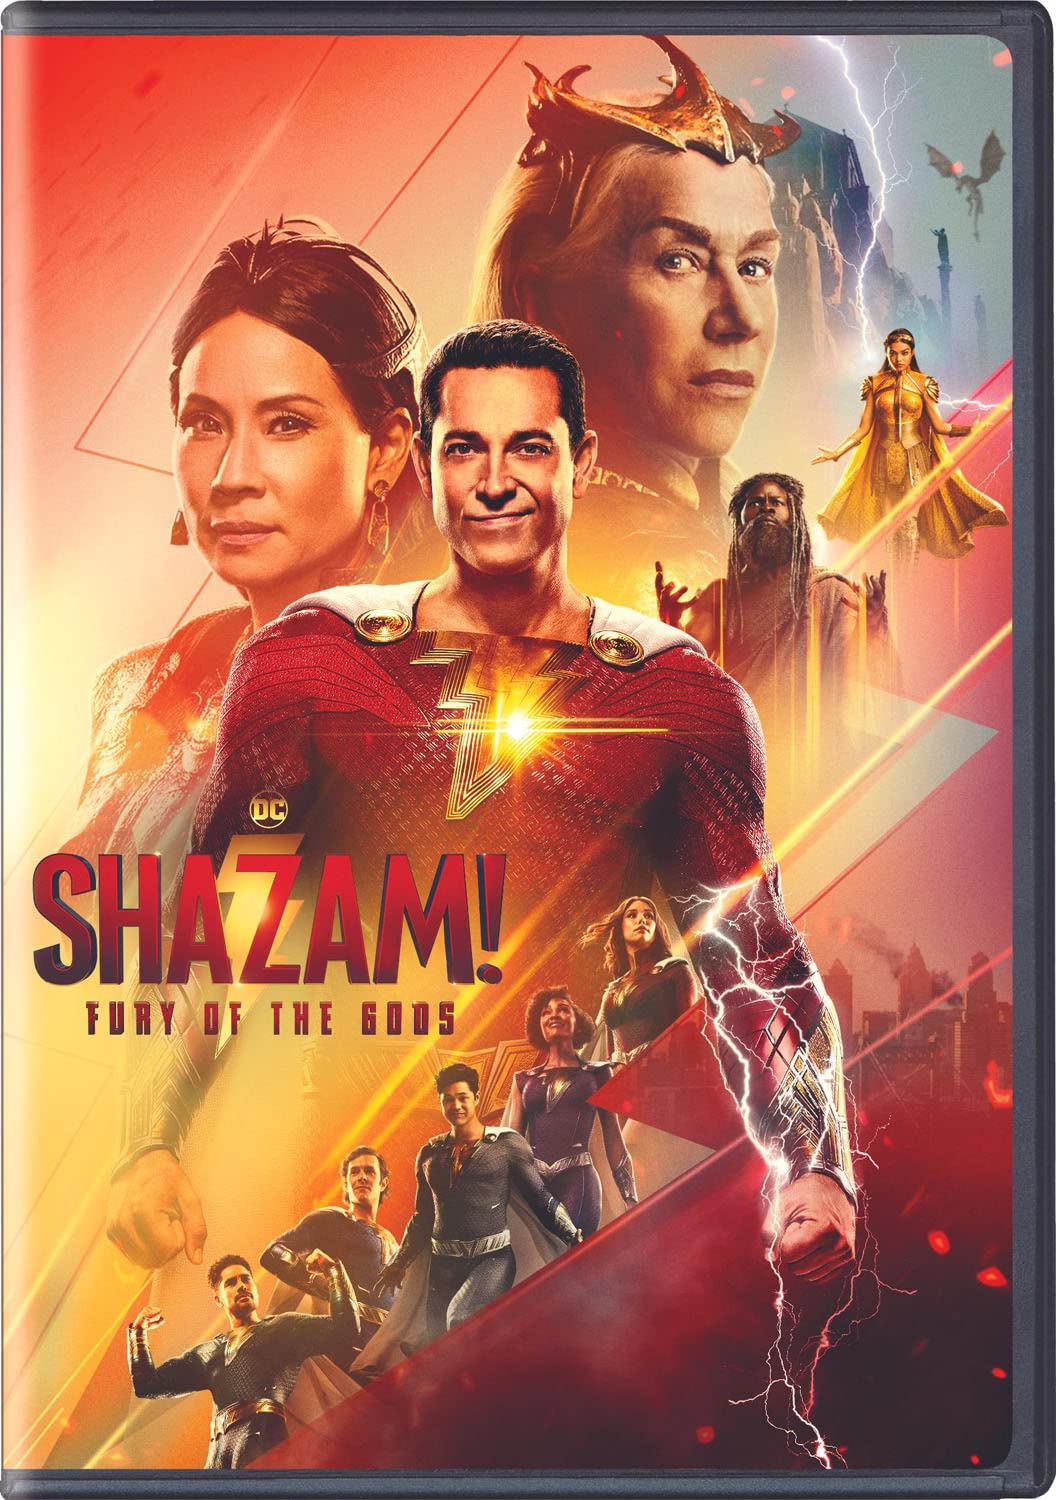 Shazam!: Fury of the Gods' Gets Digital Release Date - IMDb